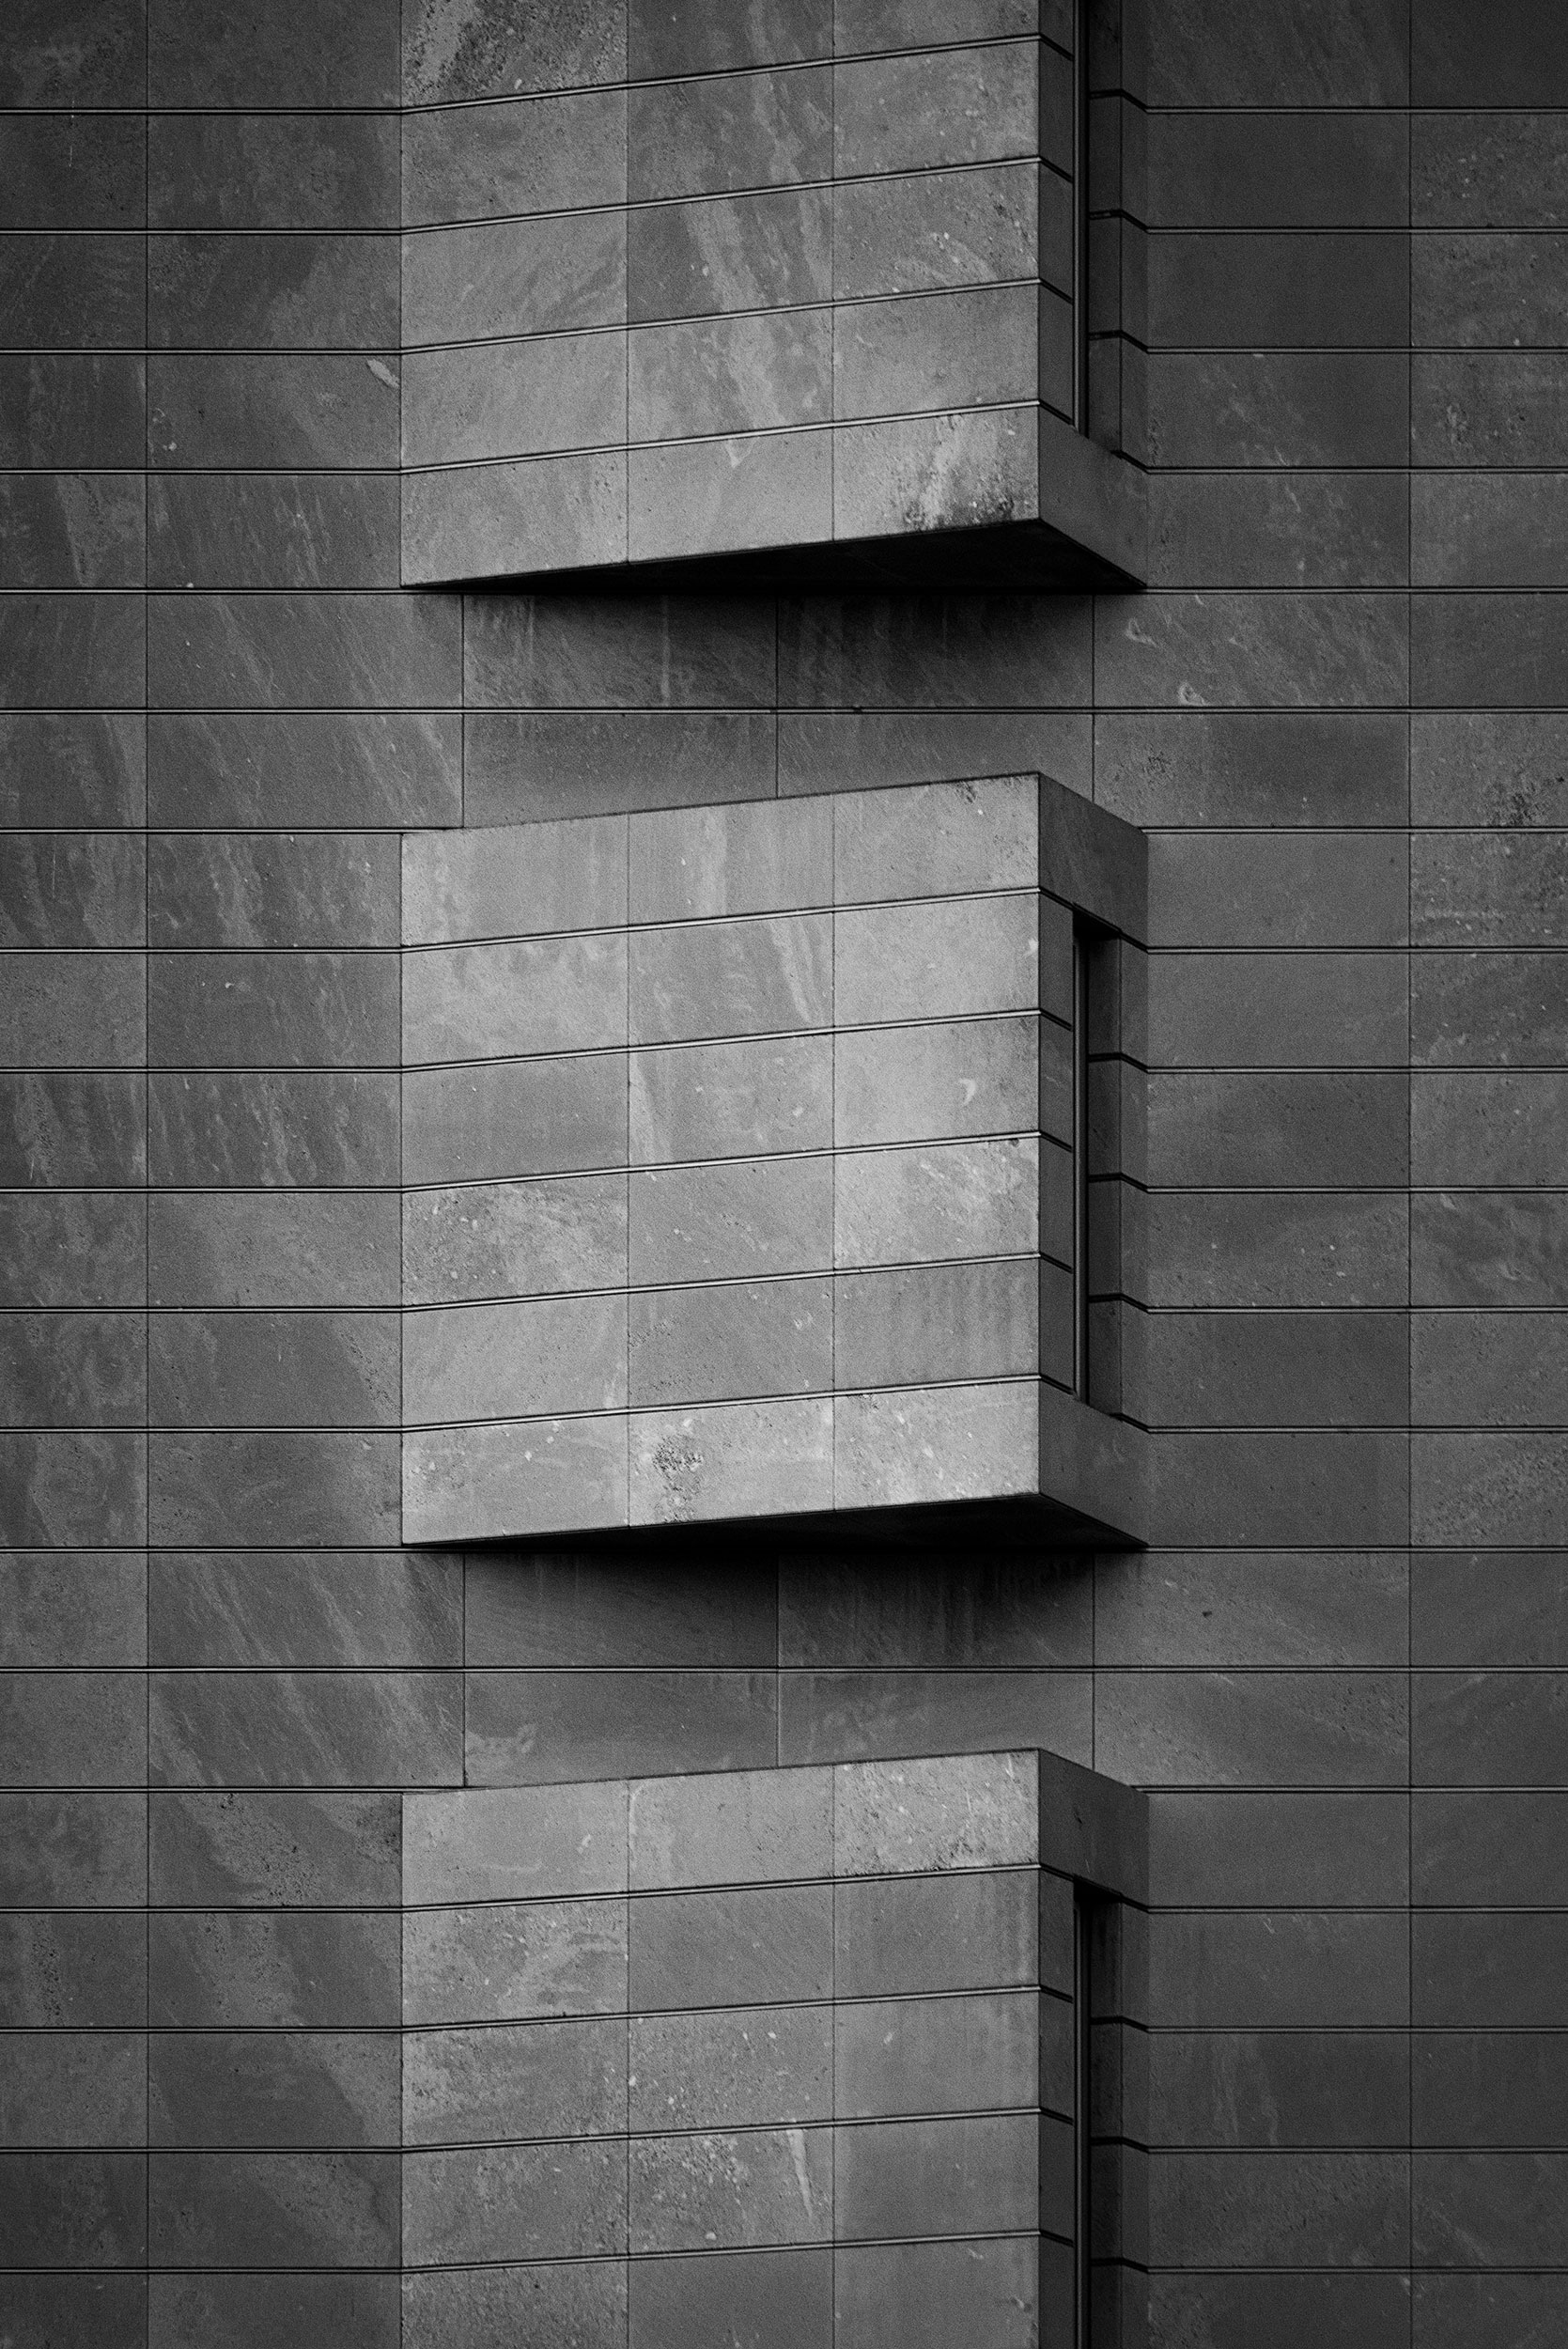 Bundespresseamt, Berlin, Architecture Photography, Black & White